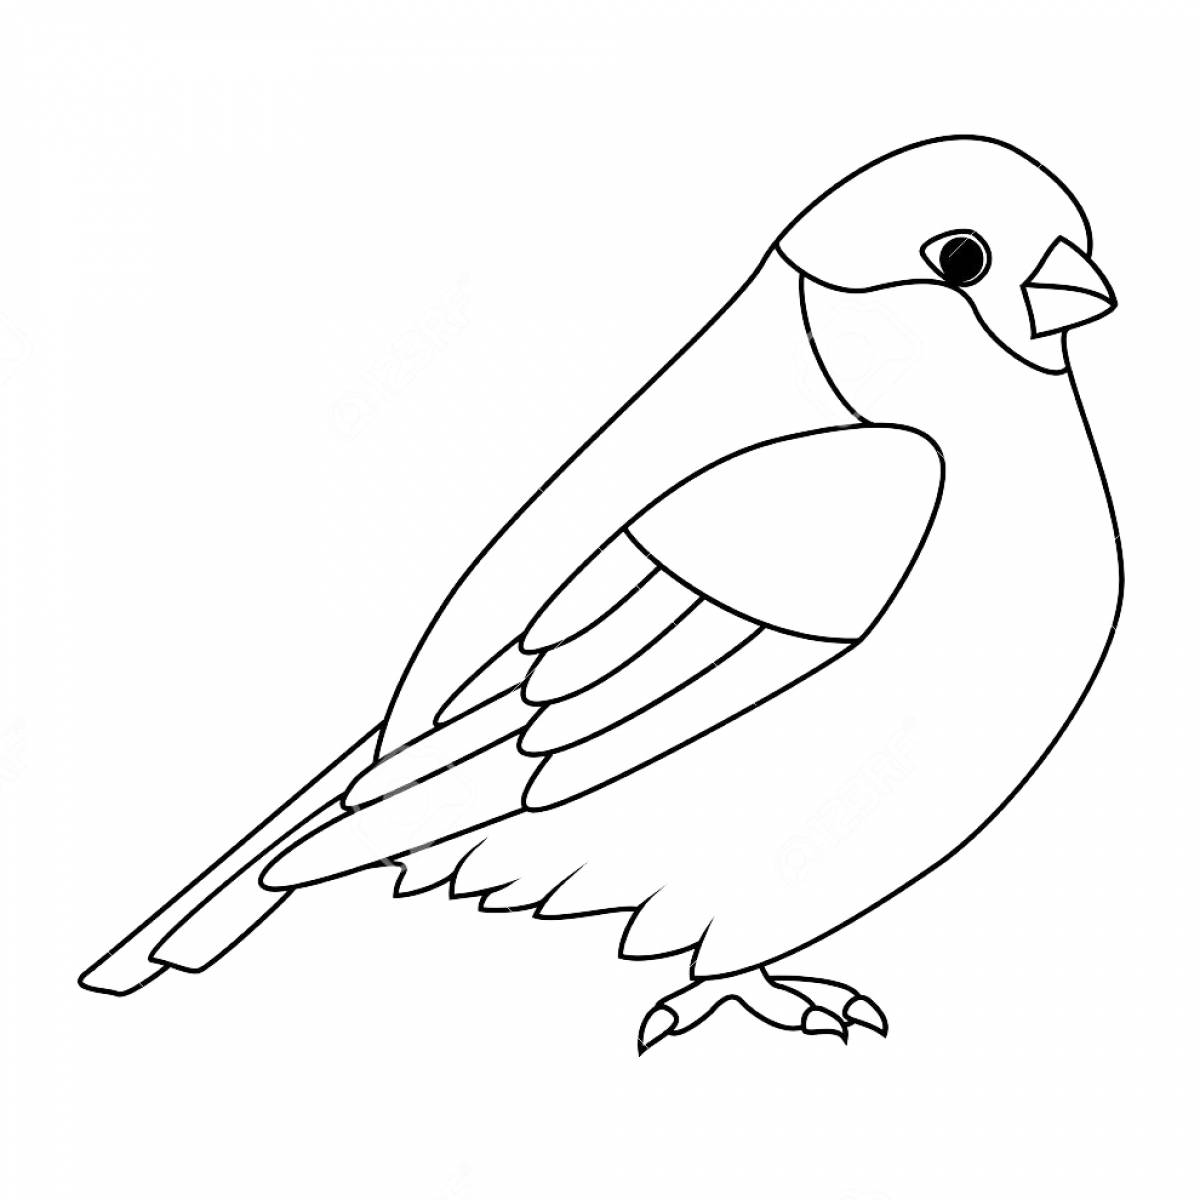 Коврик для творчества-многоразовая раскраска Птички 44,5x34,5 см